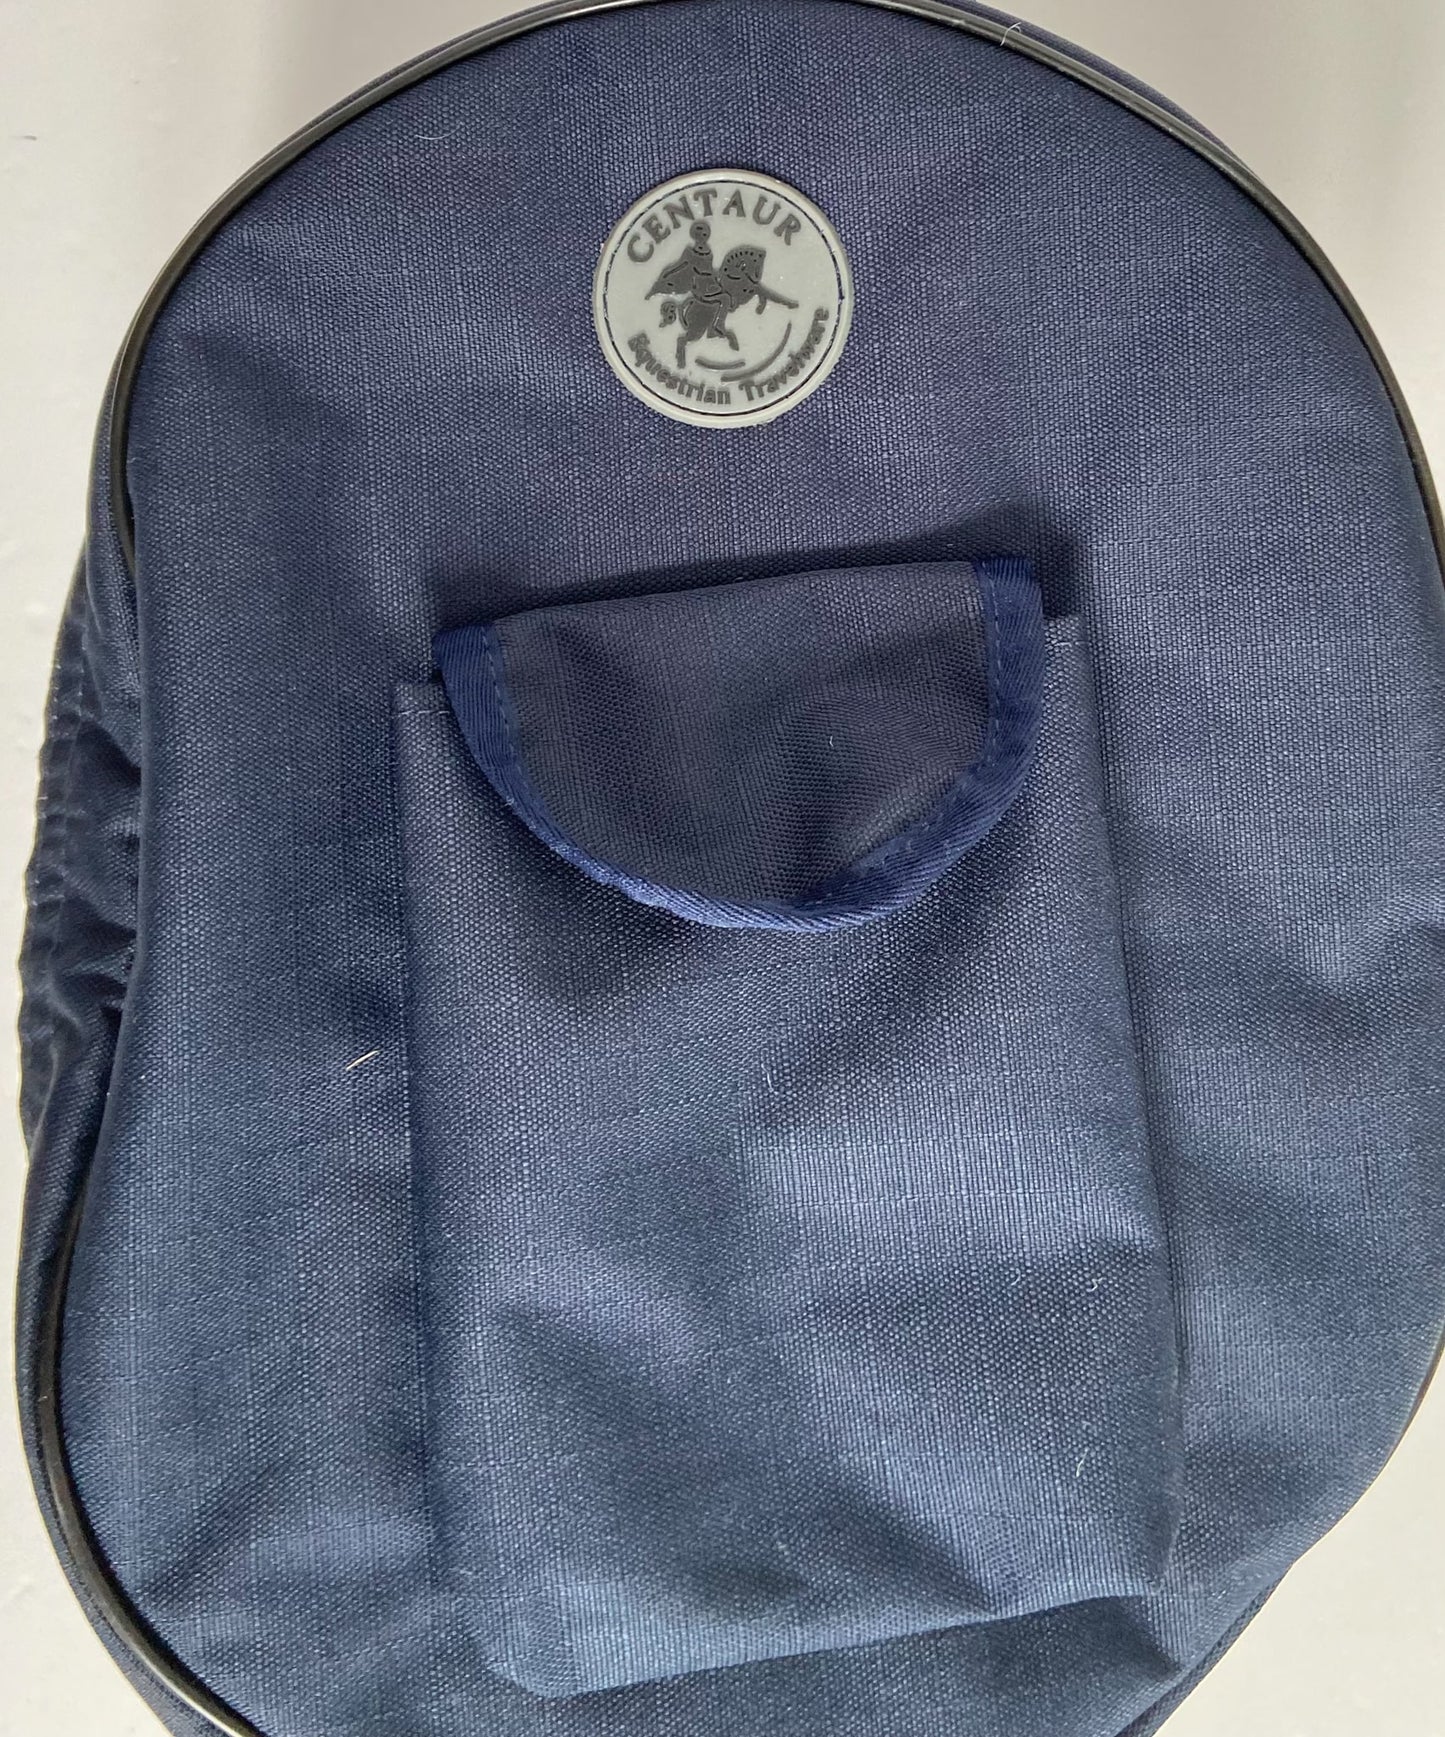 Centaur Helmet Bag - Navy - One Size